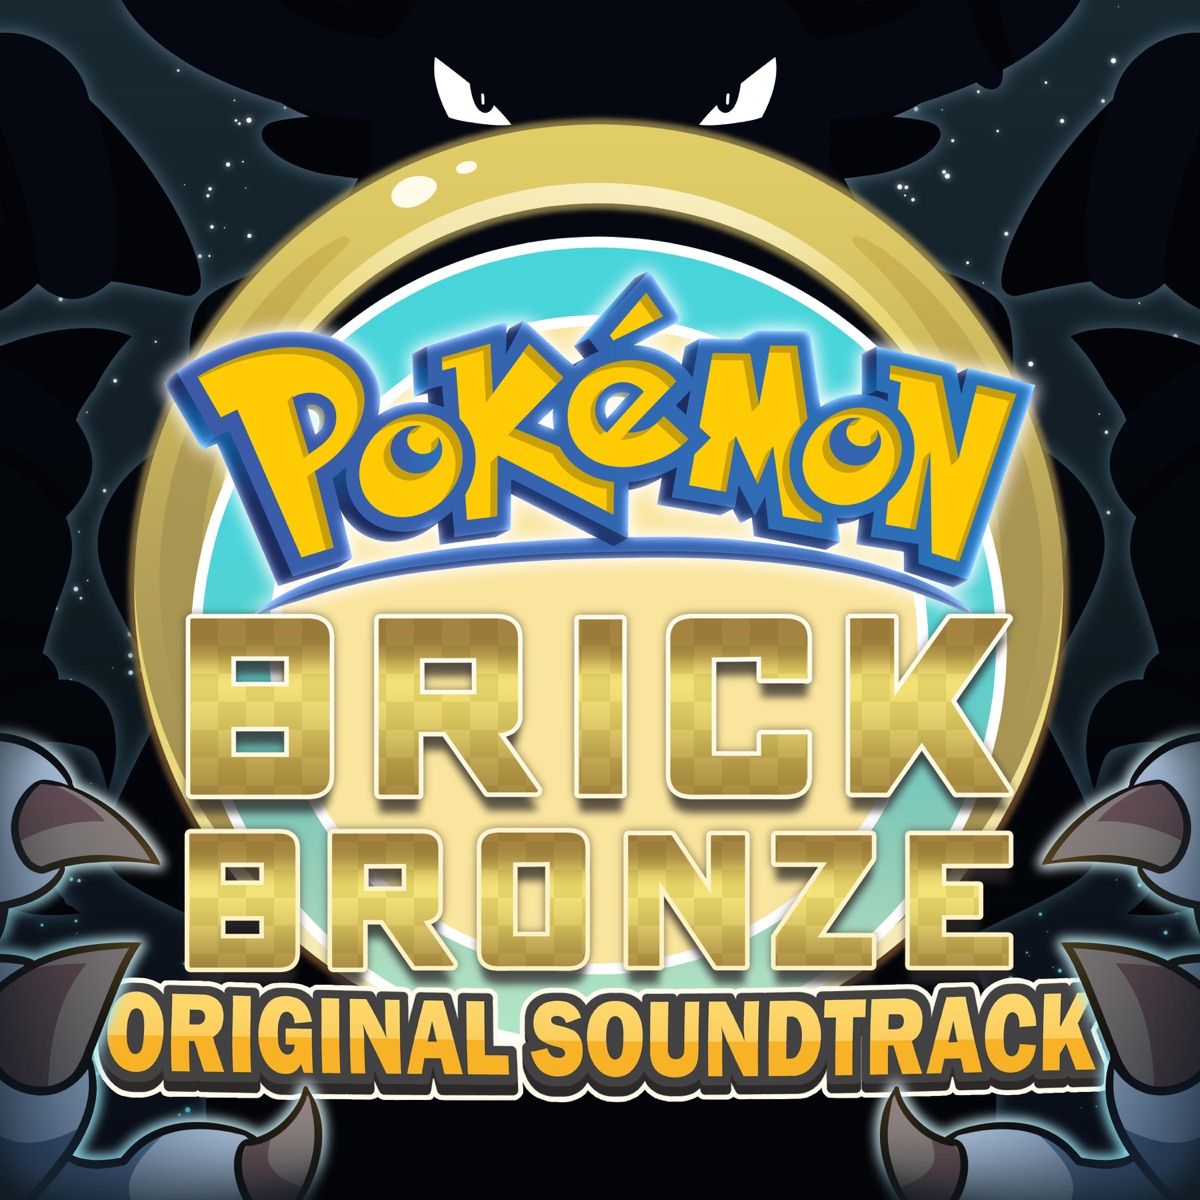 Pokemon brick bronze 7th gym update